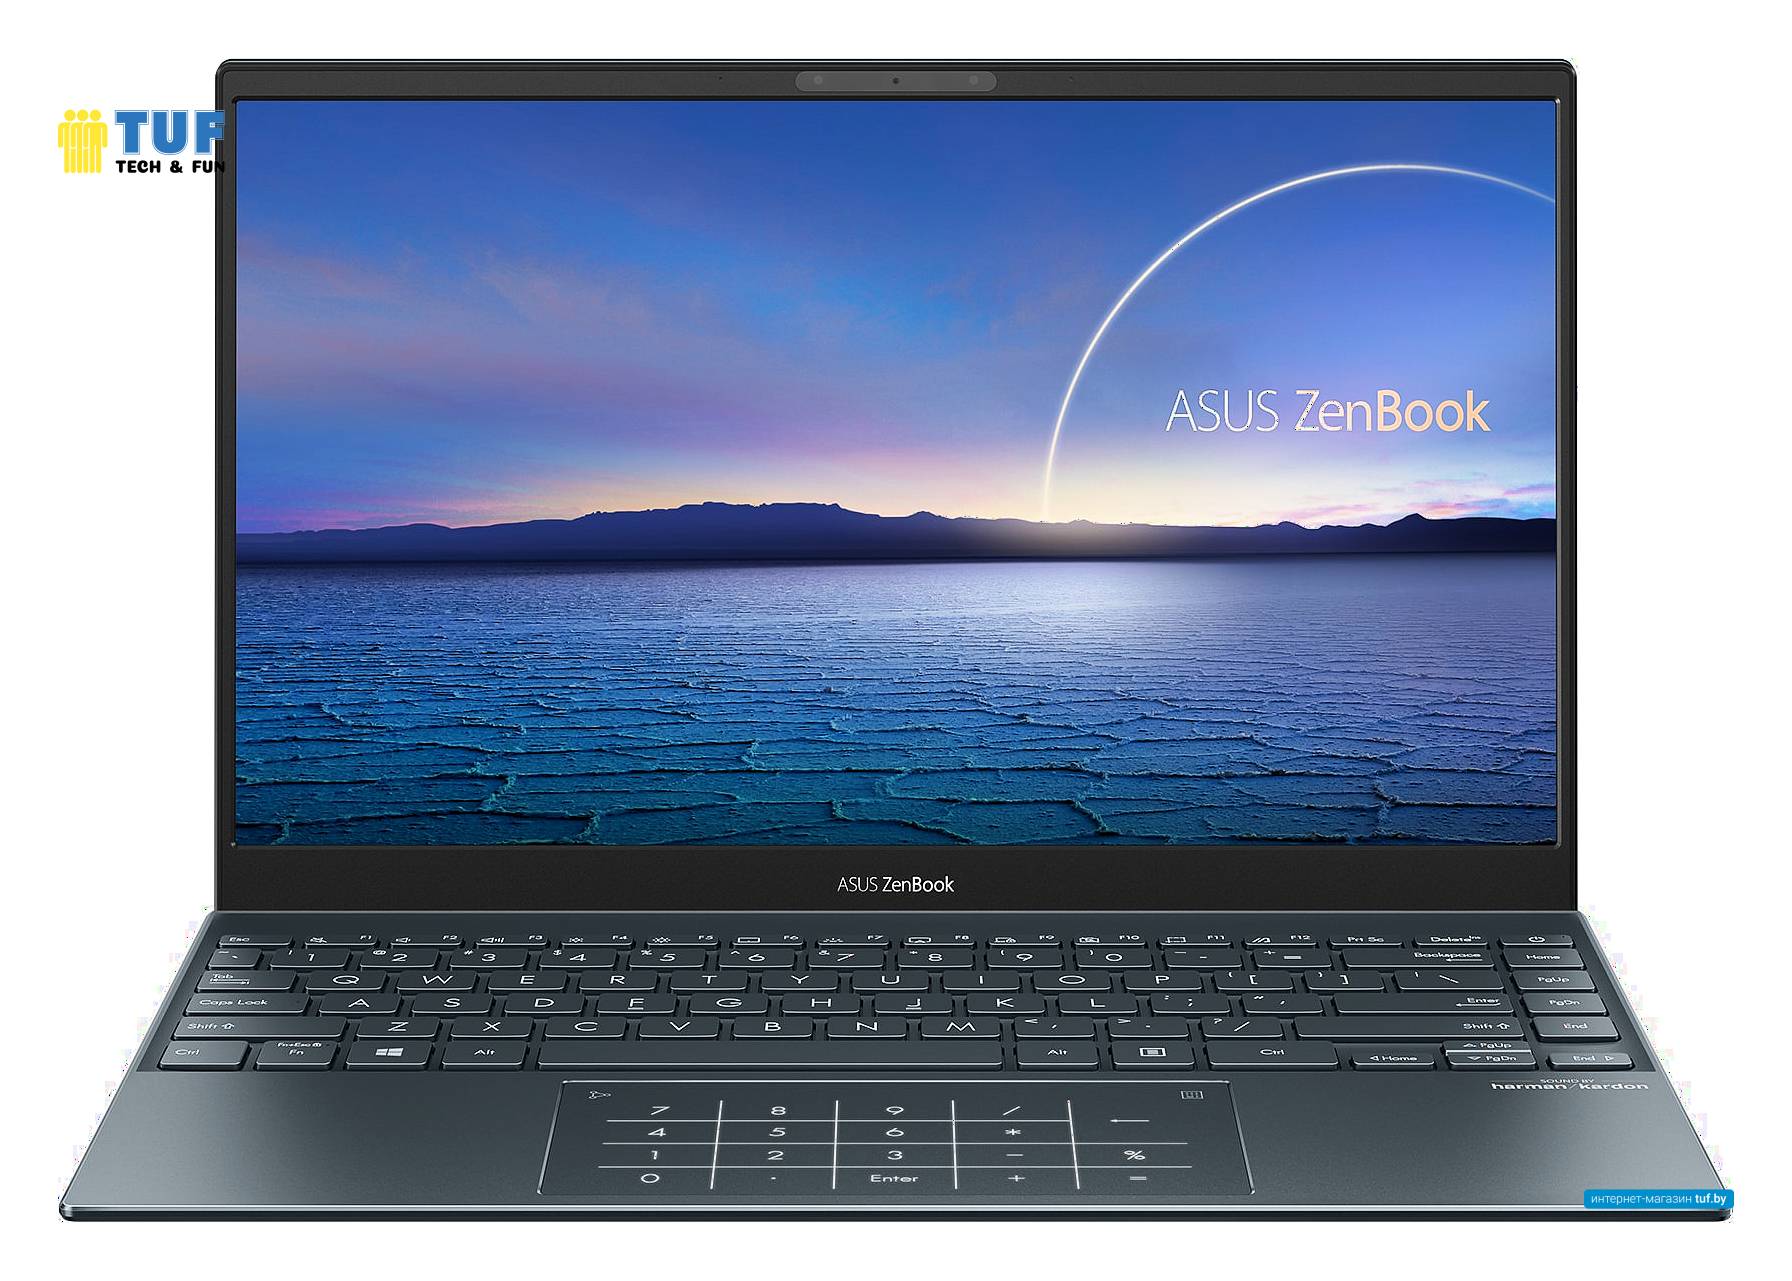 Ноутбук ASUS ZenBook 13 UX325EA-AH029T